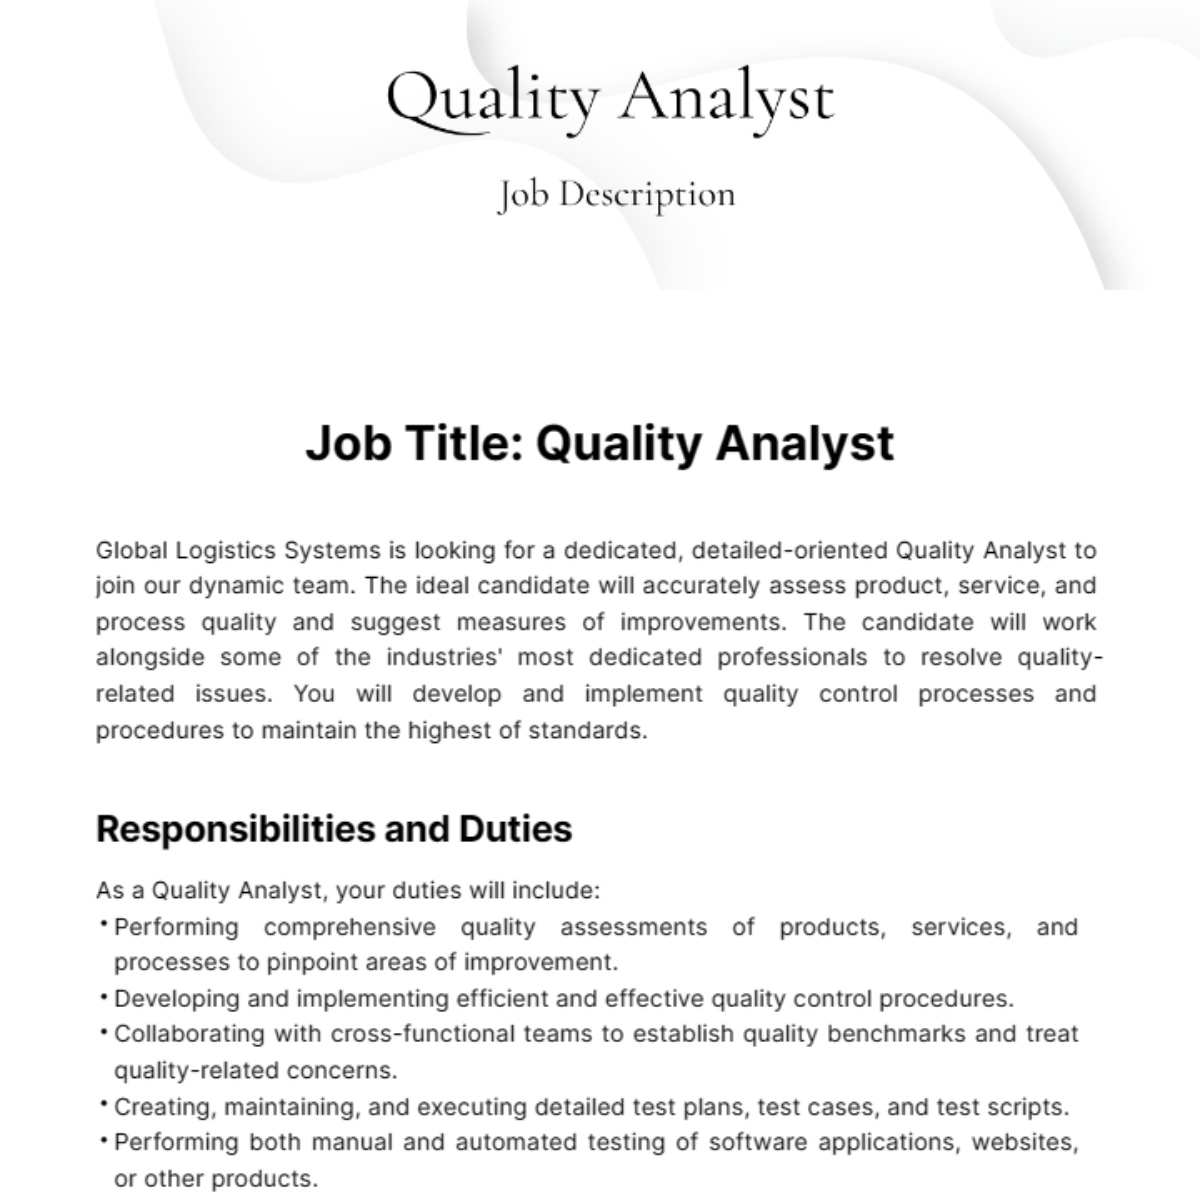 Quality Analyst Job Description Template